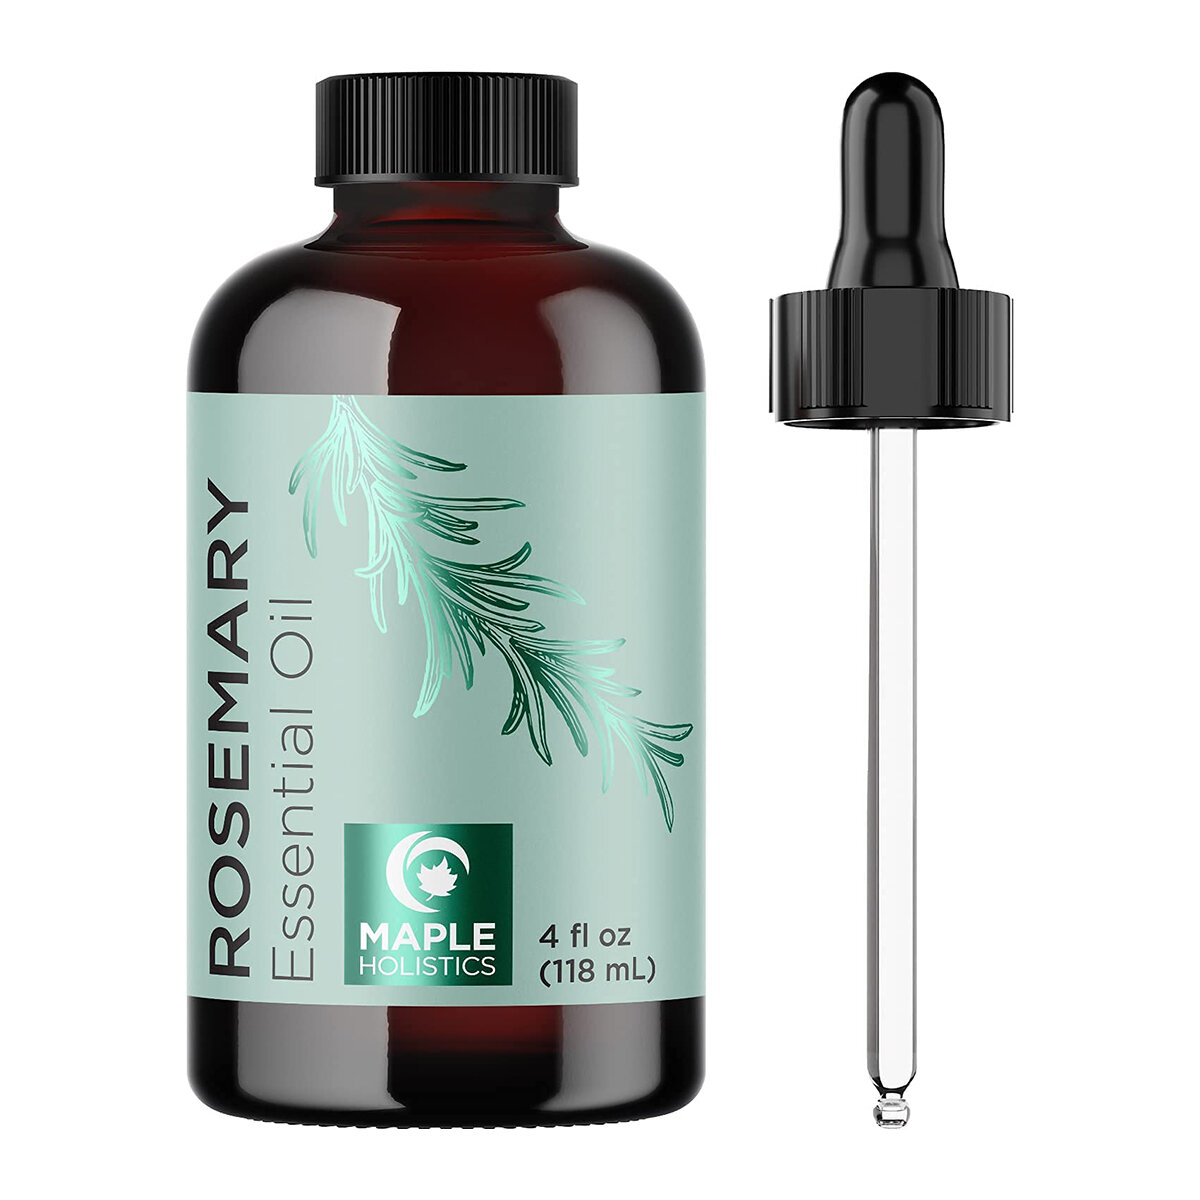 Rosemary Essential Oil